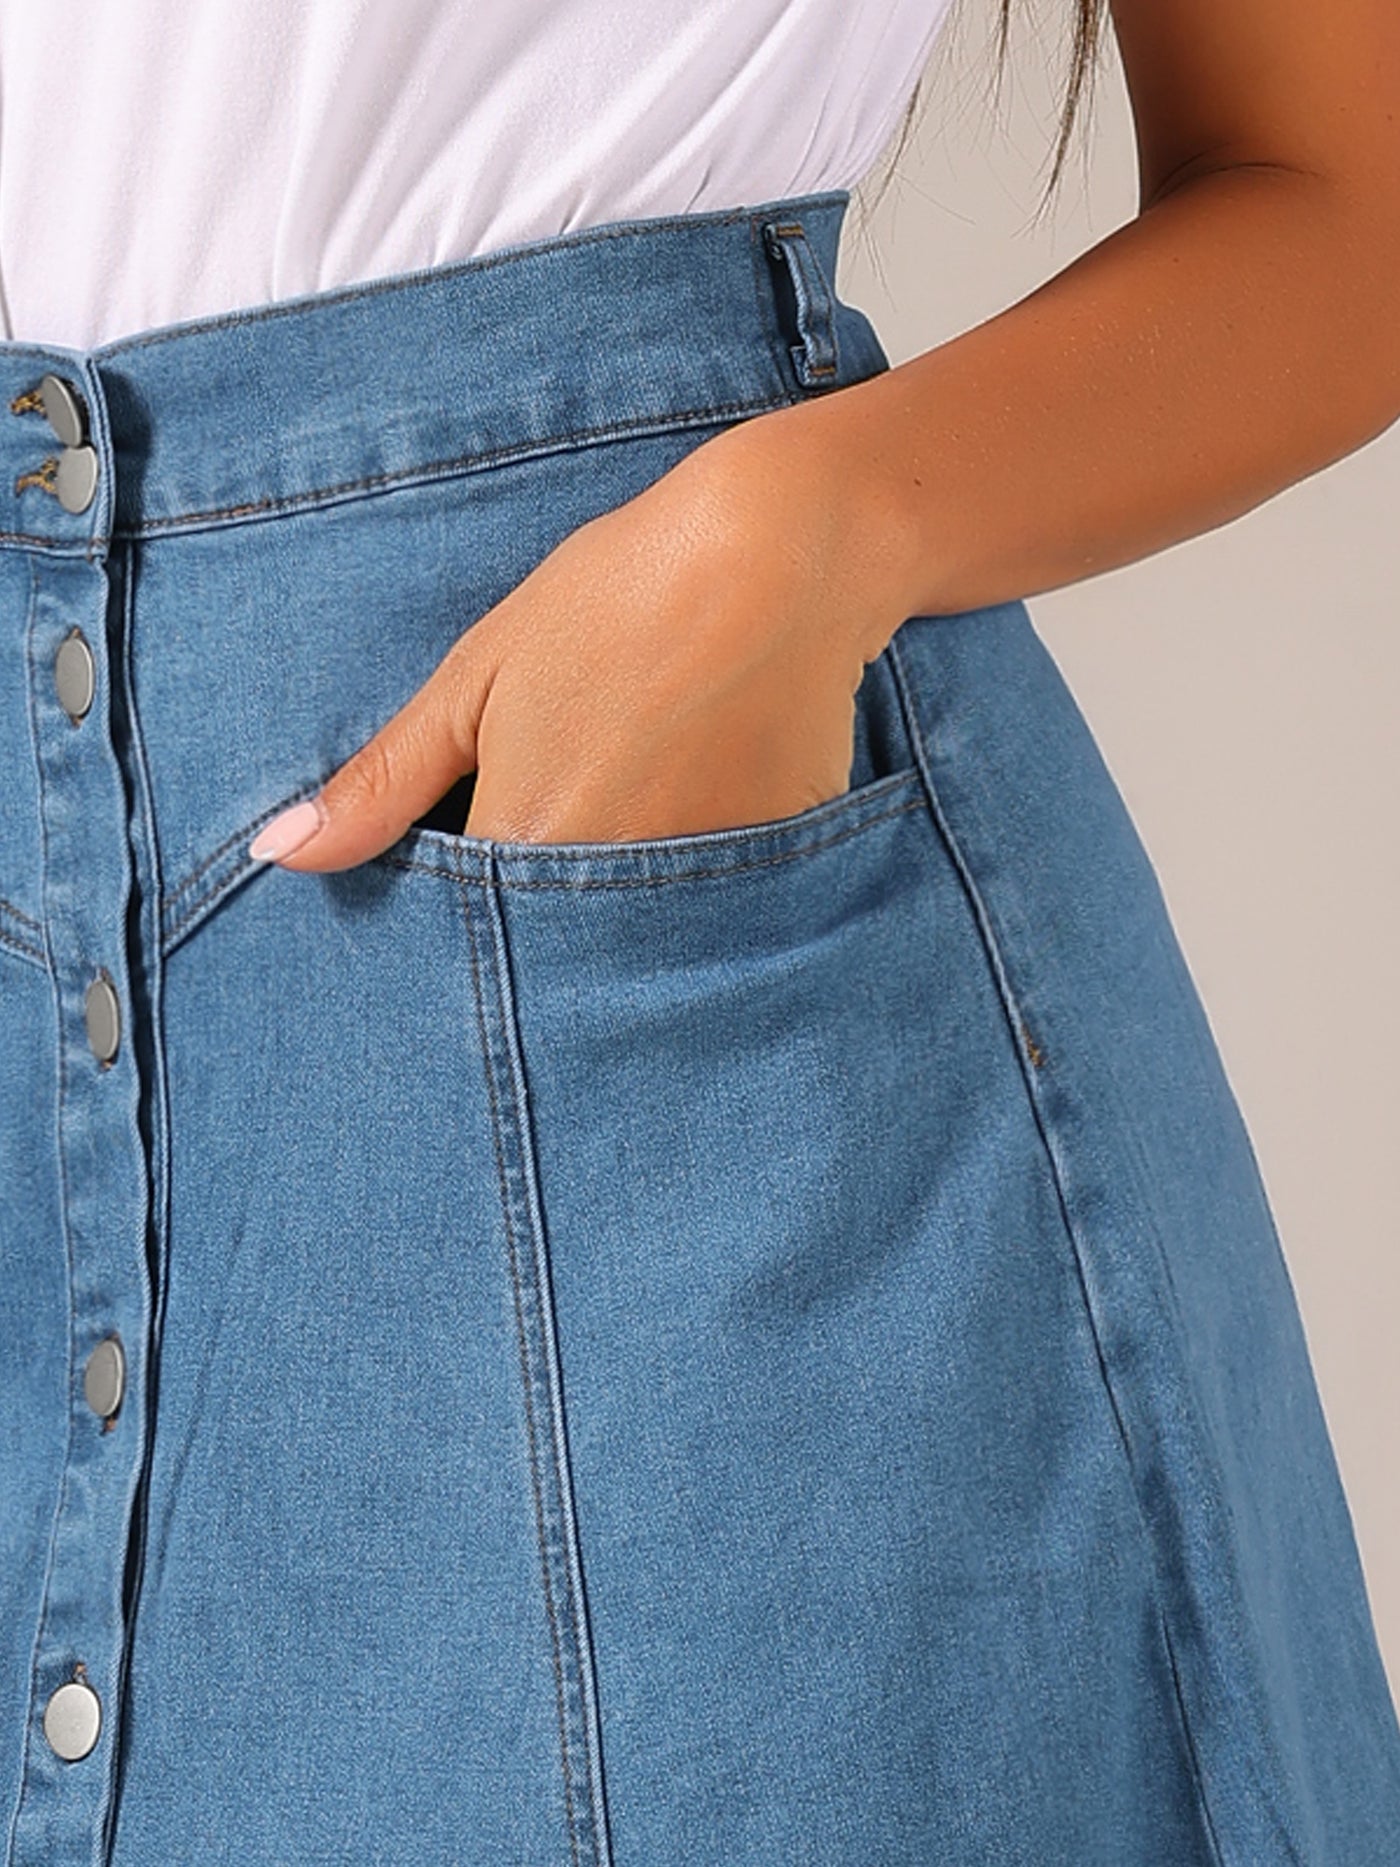 Allegra K Stretchy High Waist Buttons Front A-Line Flowy Pockets Midi Skirt